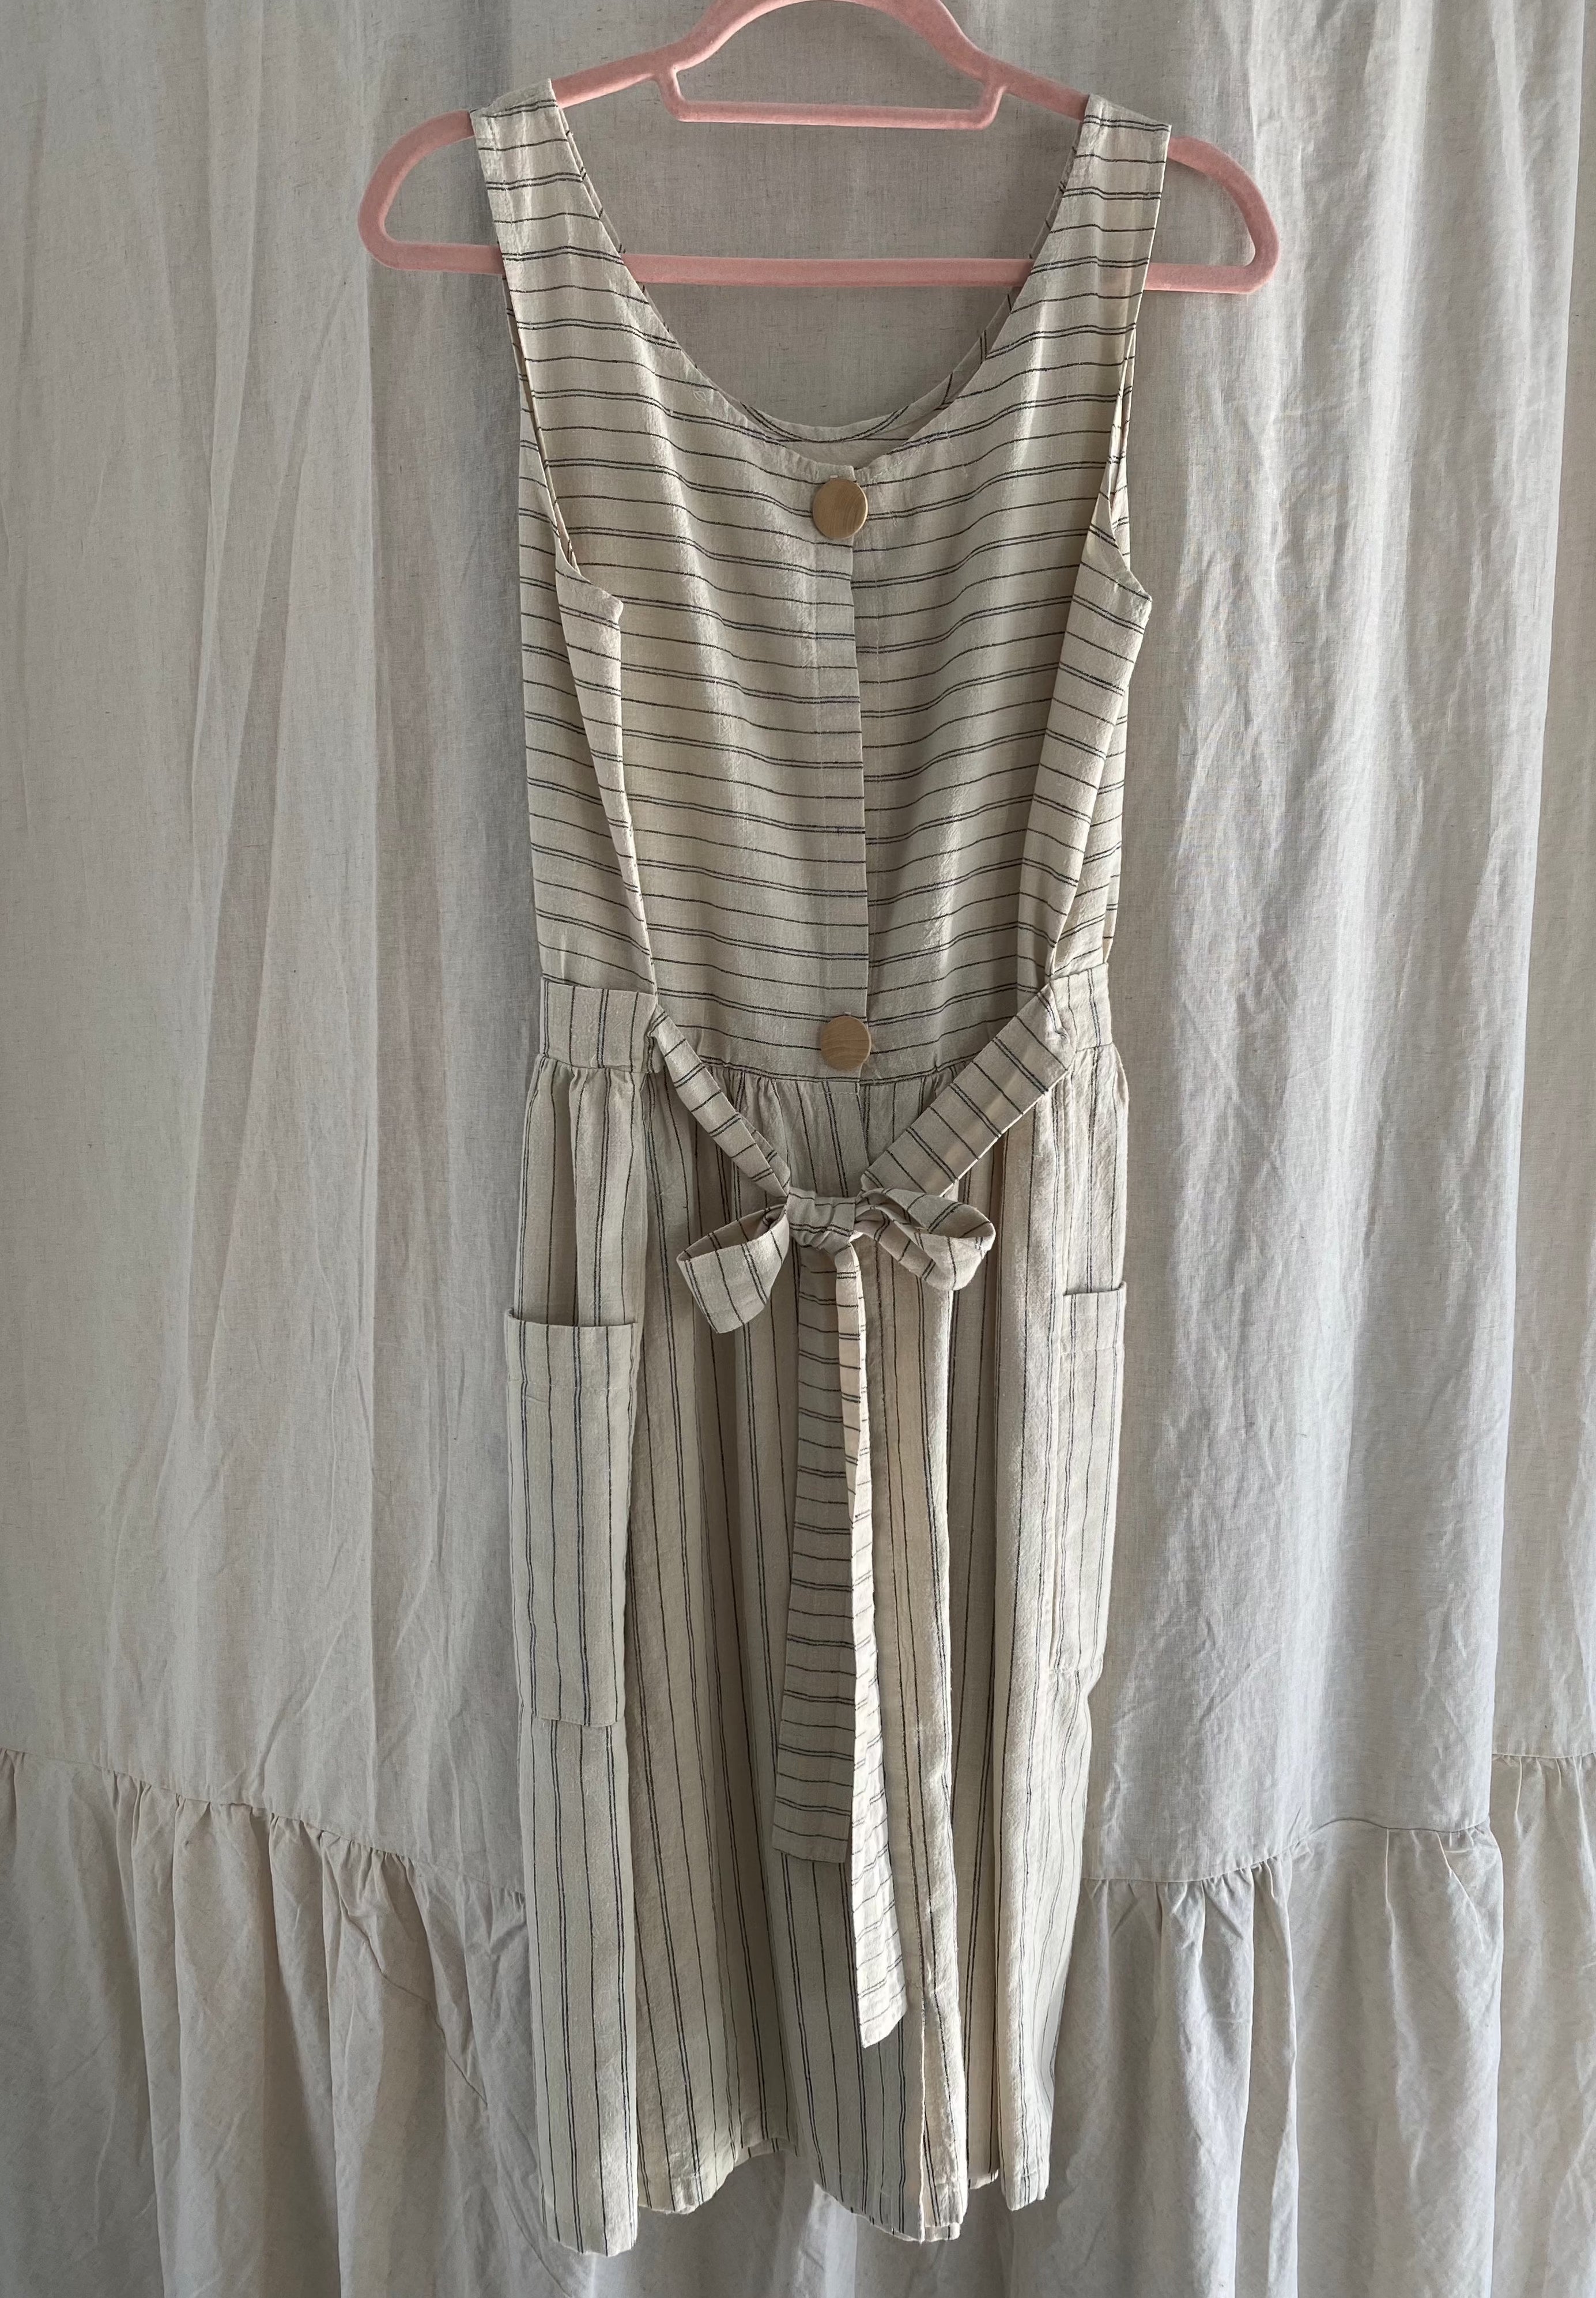 Marketplace - Medium - The Dress - Hemp Organic Cotton -  Butter Cream Stripe